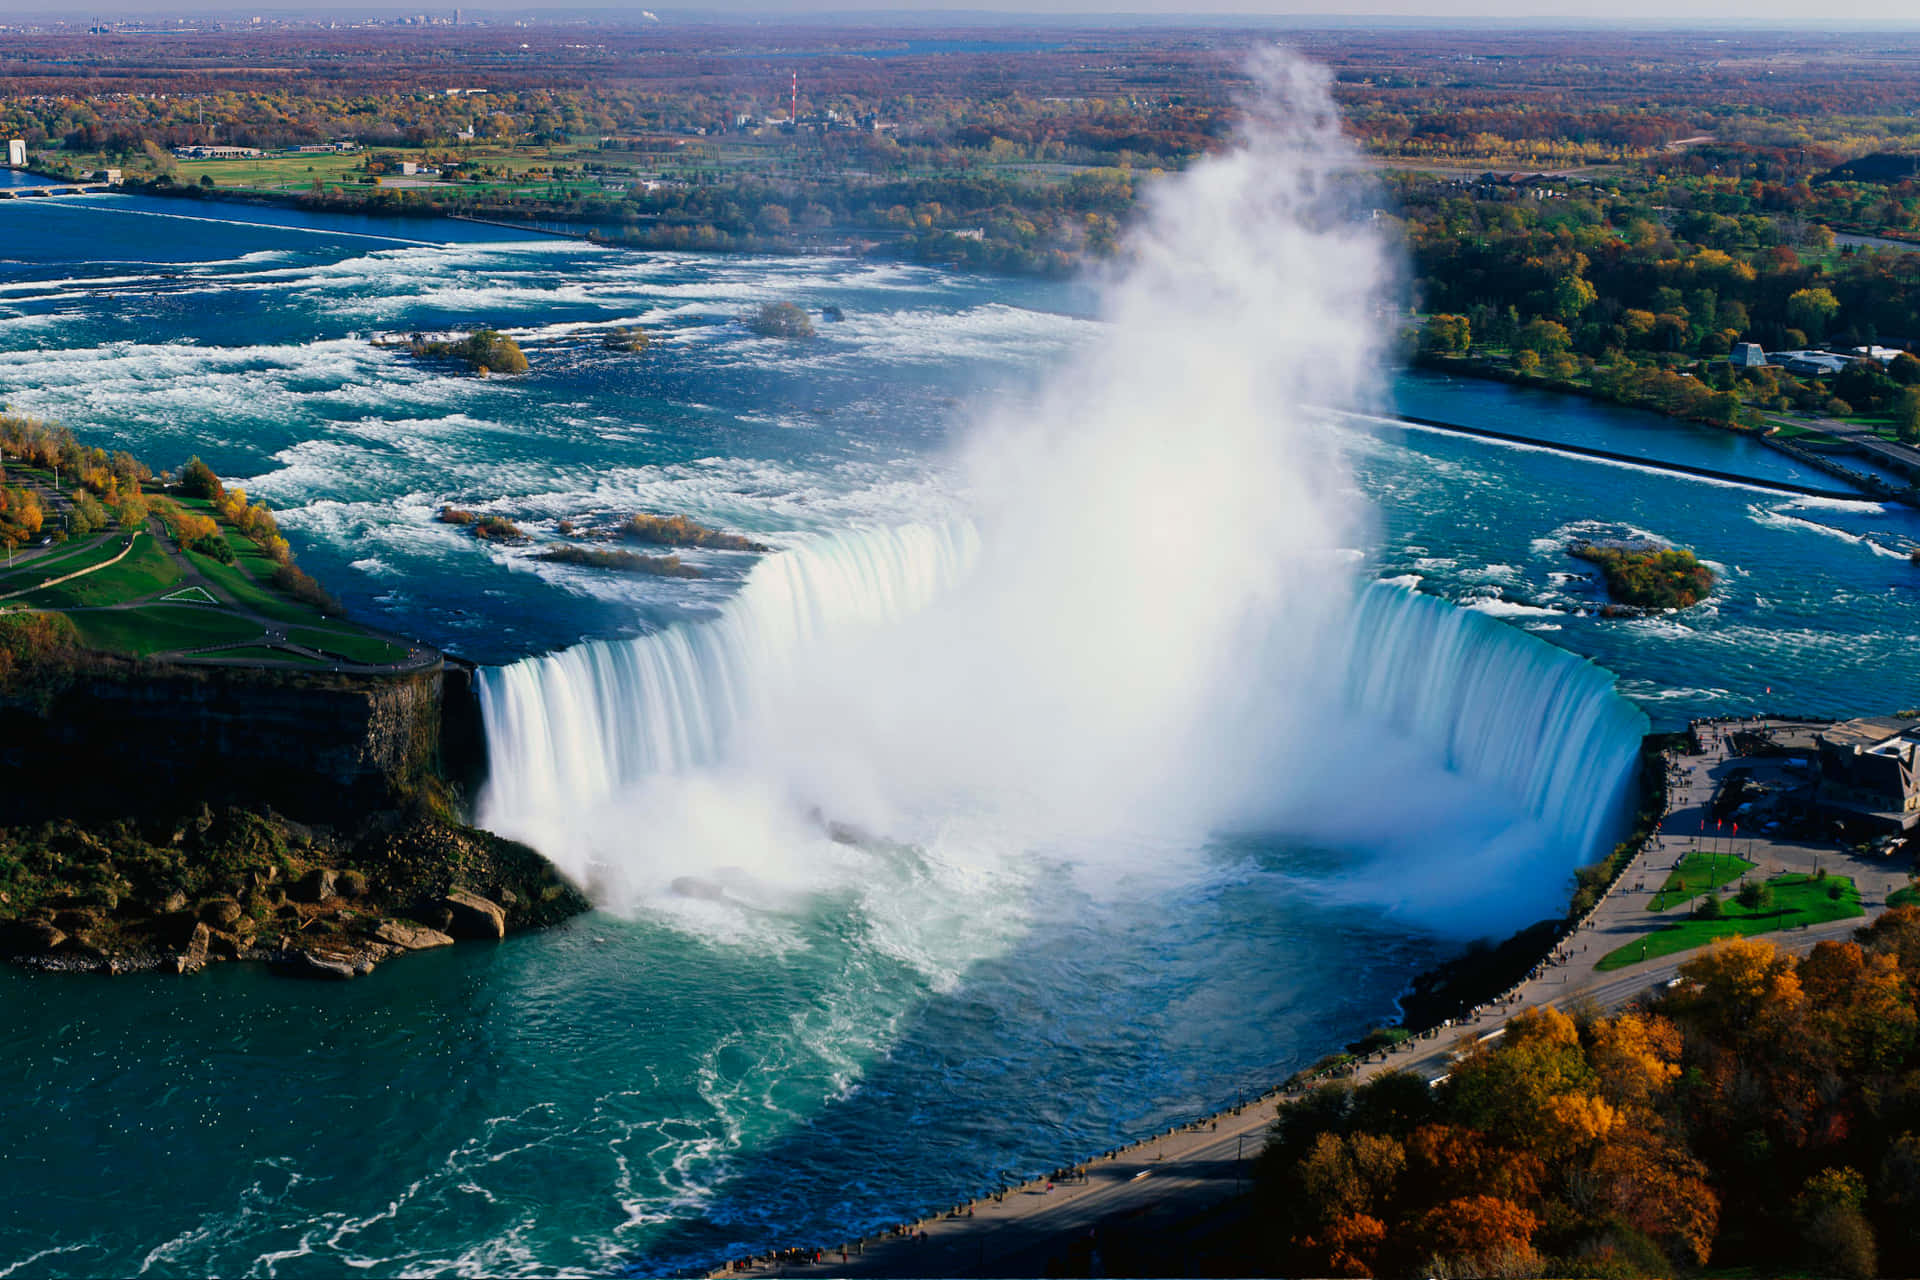 Marvel at the Magnificent Niagara Falls